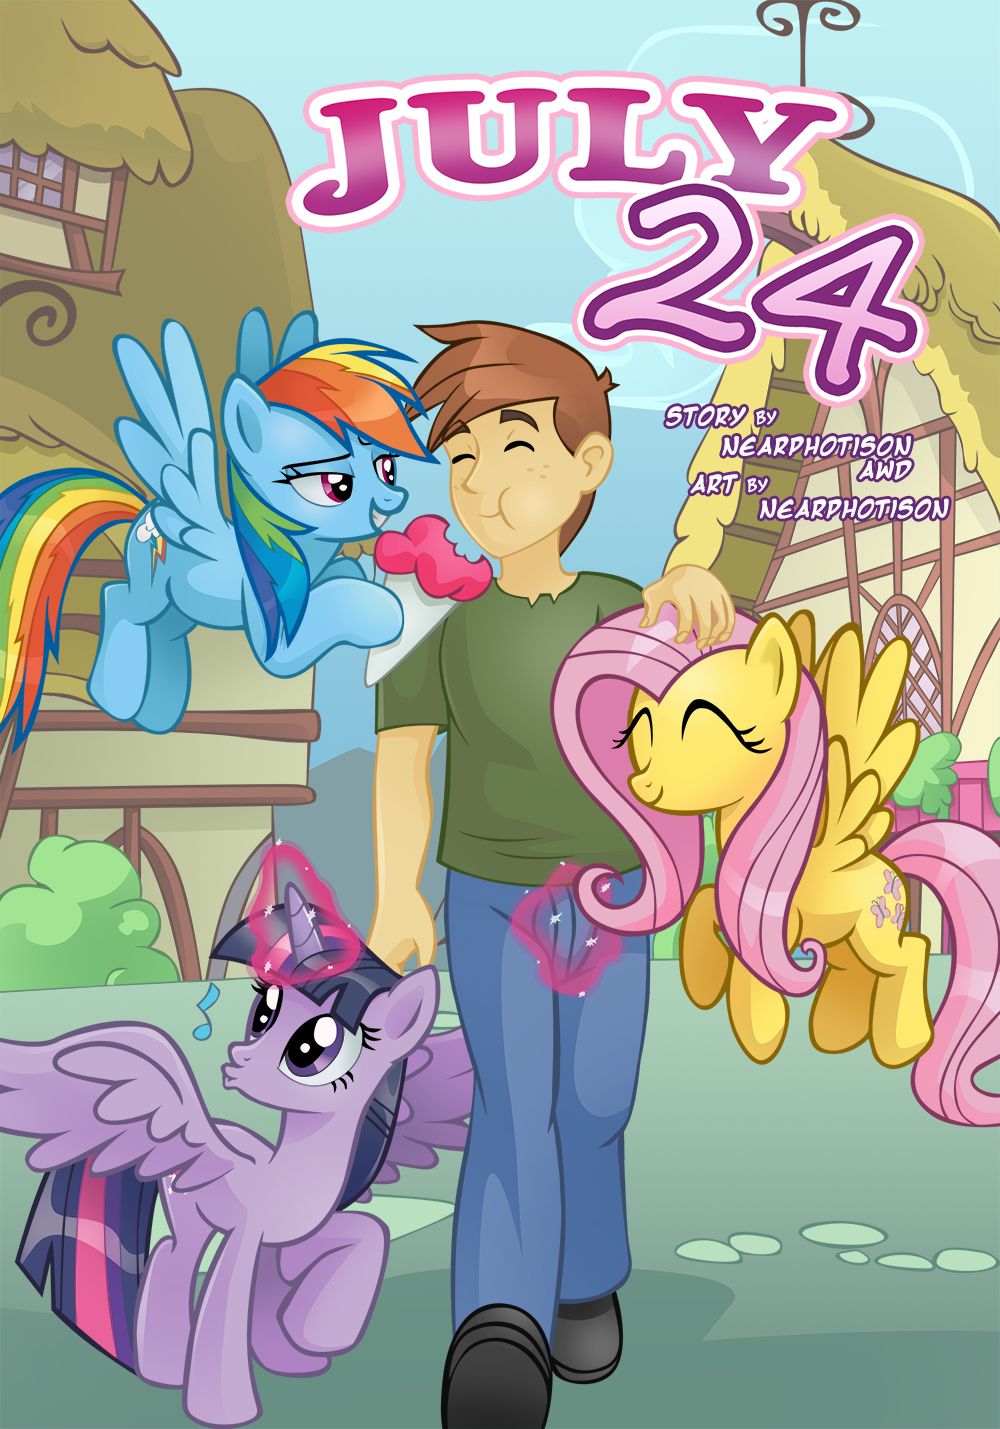 July 24 (My Little Pony: Friendship is Magic) Nearphotison - FreeAdultComix